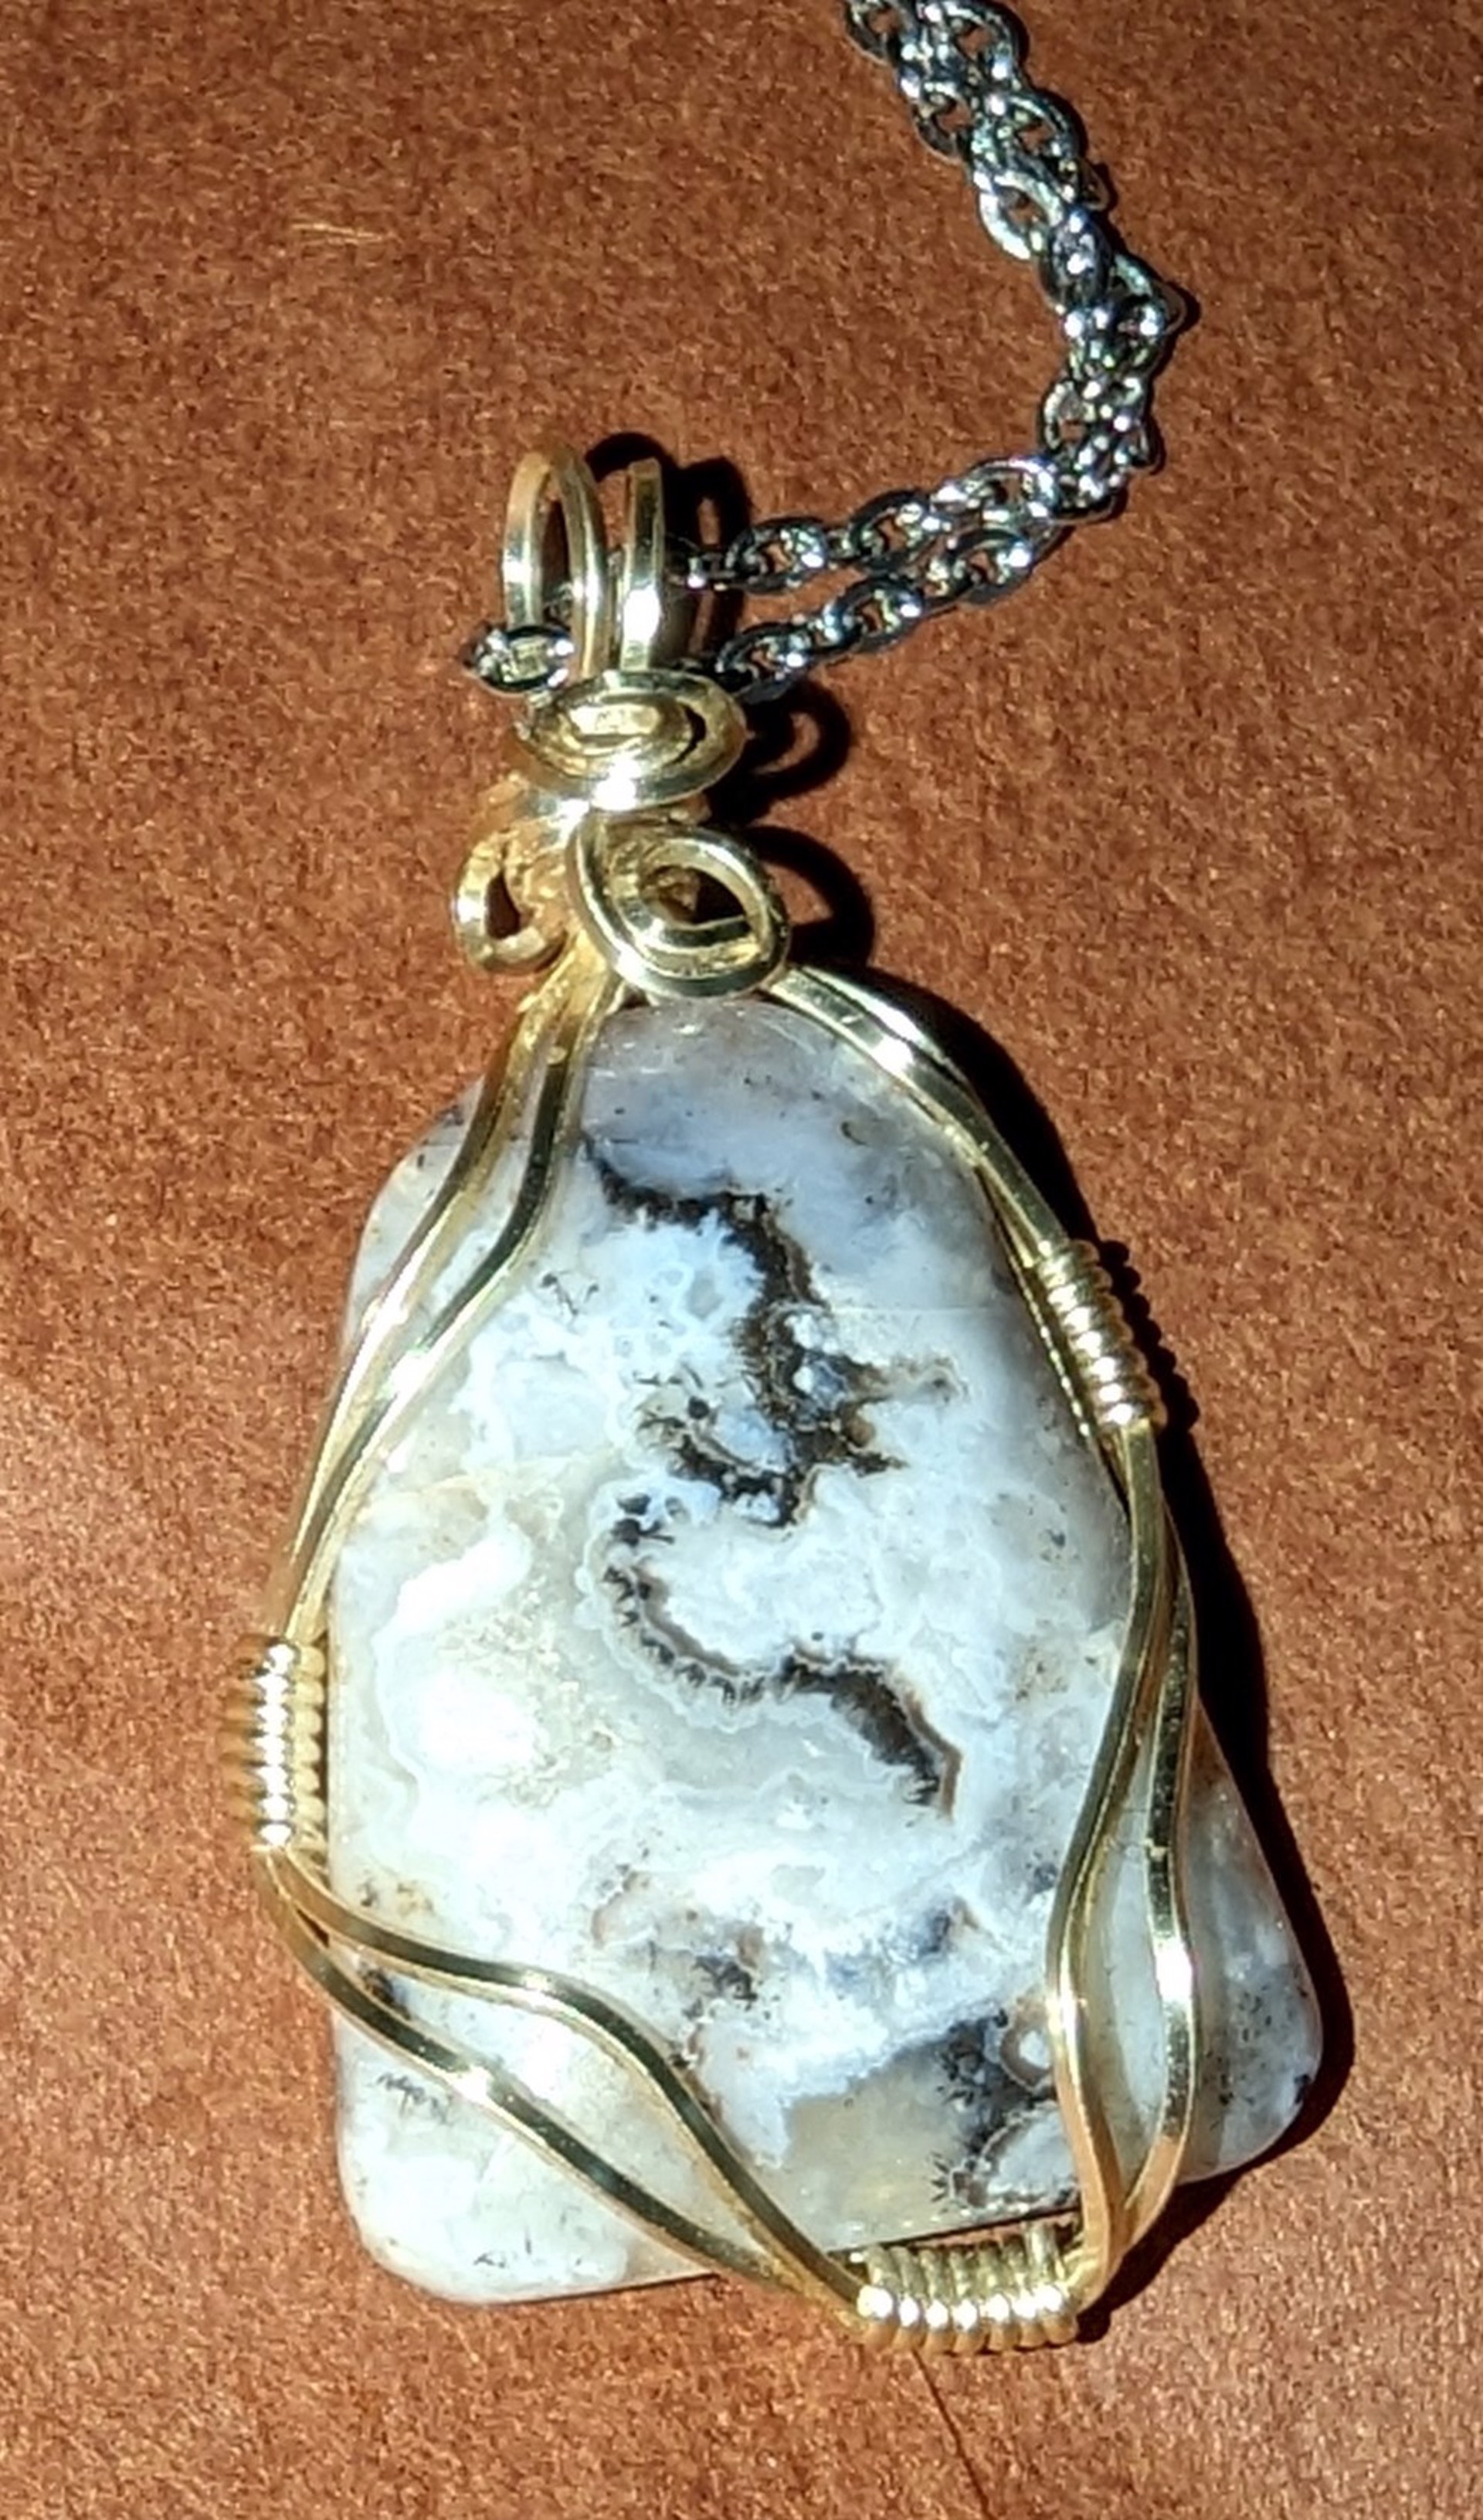 Sagenite agate pendant by Betty Binder